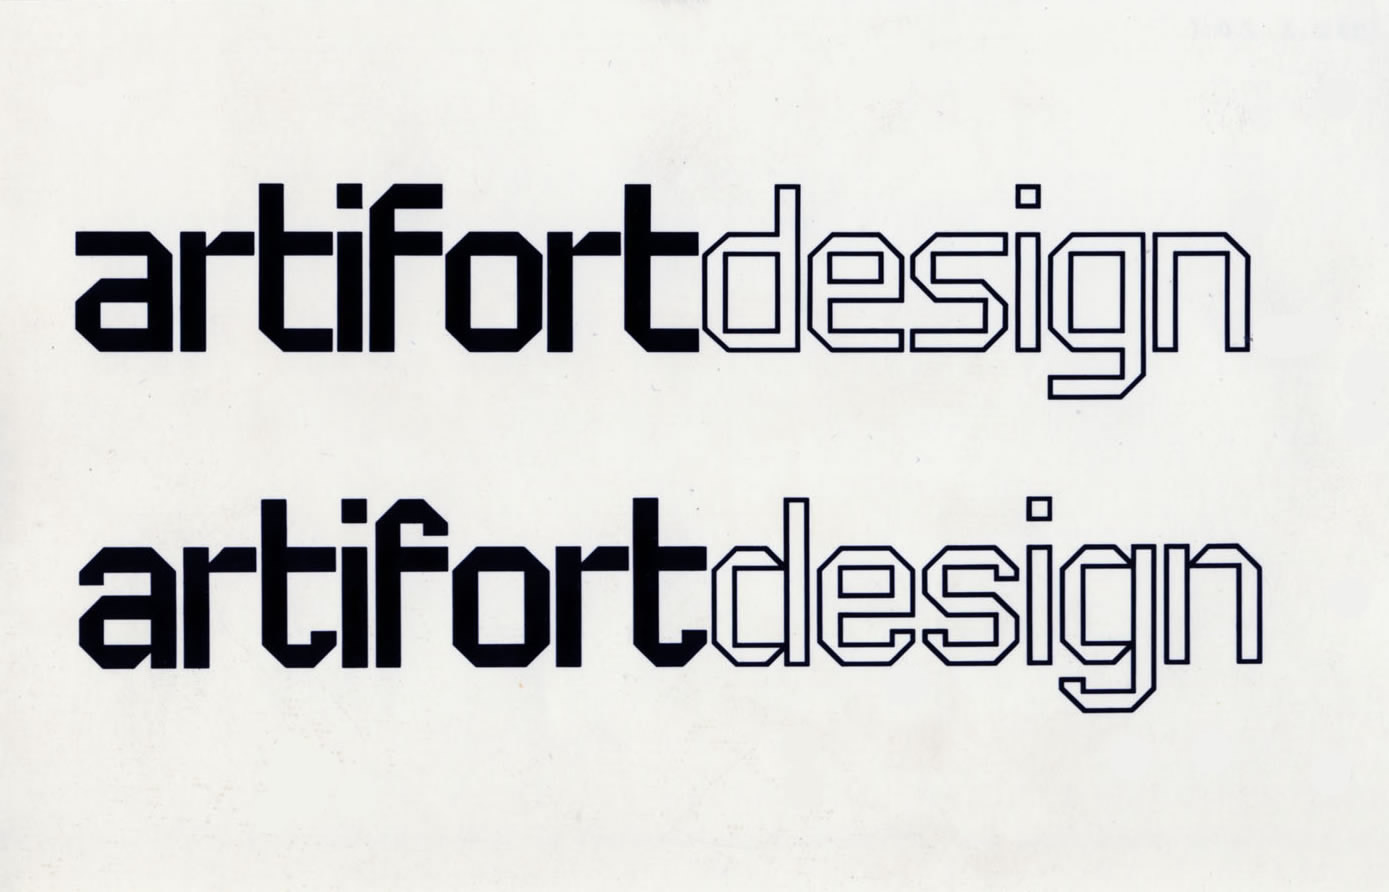 Wim Crouwel: Artifortdesign logo. 1960